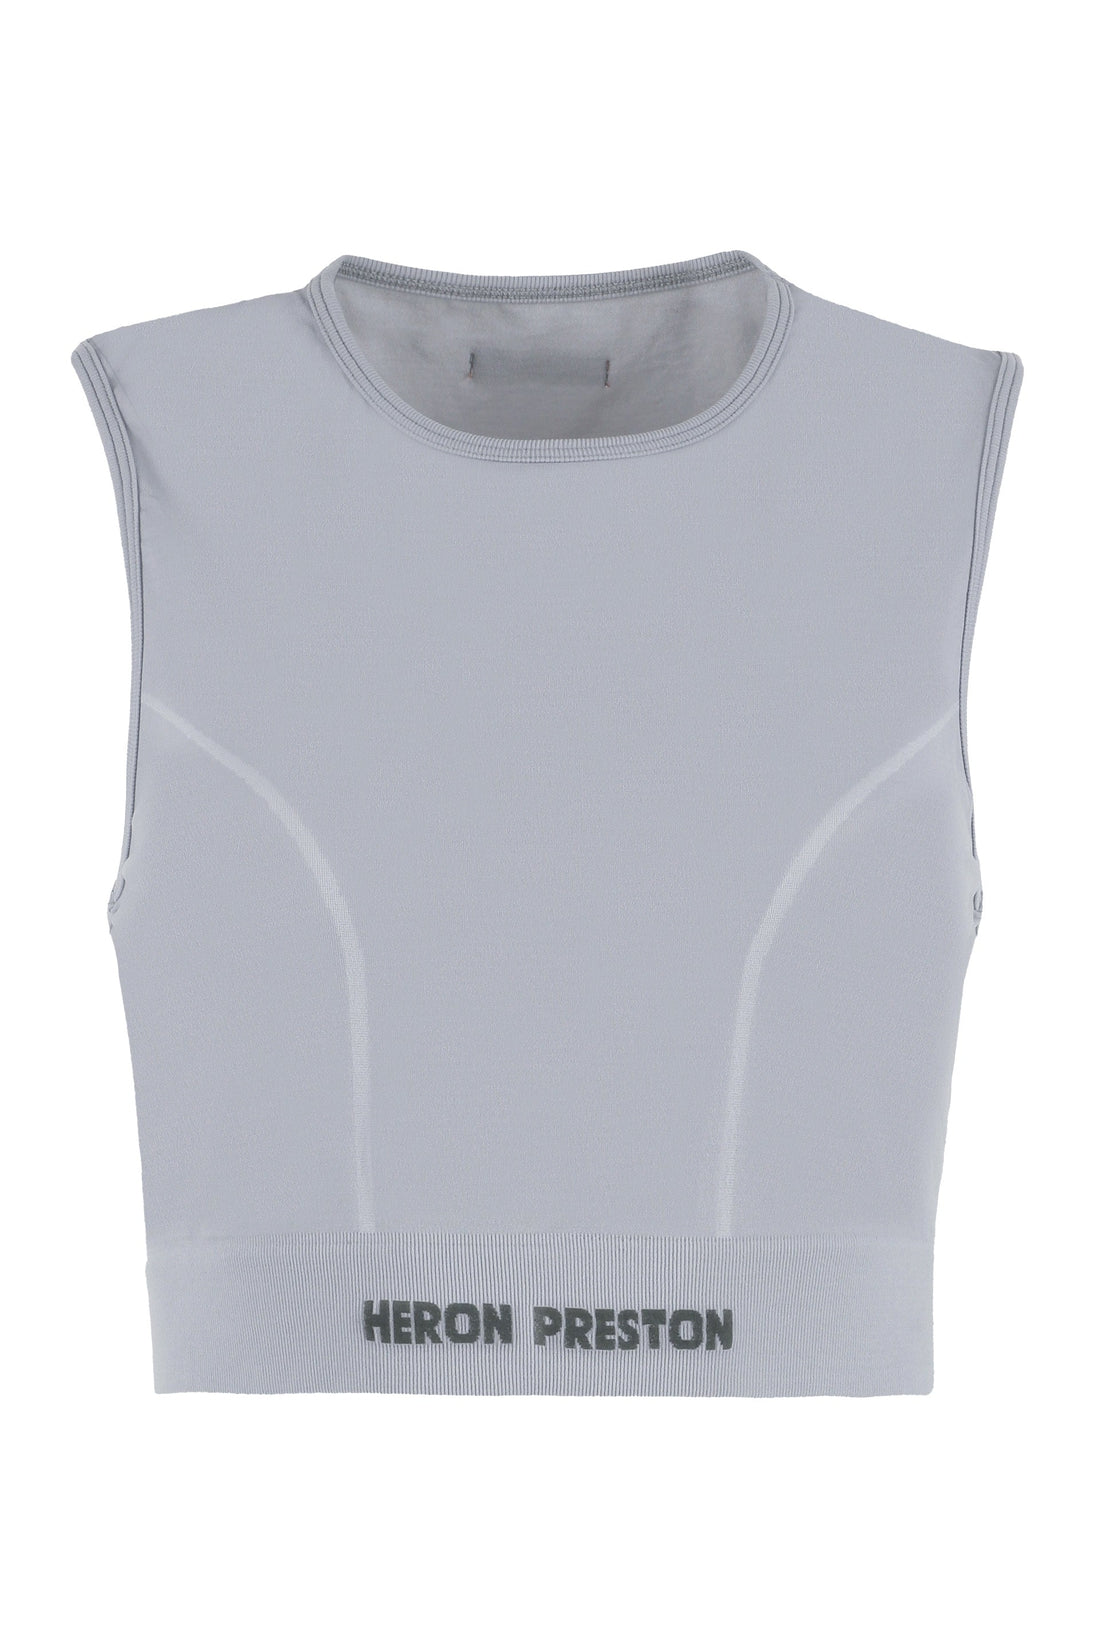 Heron Preston-OUTLET-SALE-Active logo sporty tank-top-ARCHIVIST